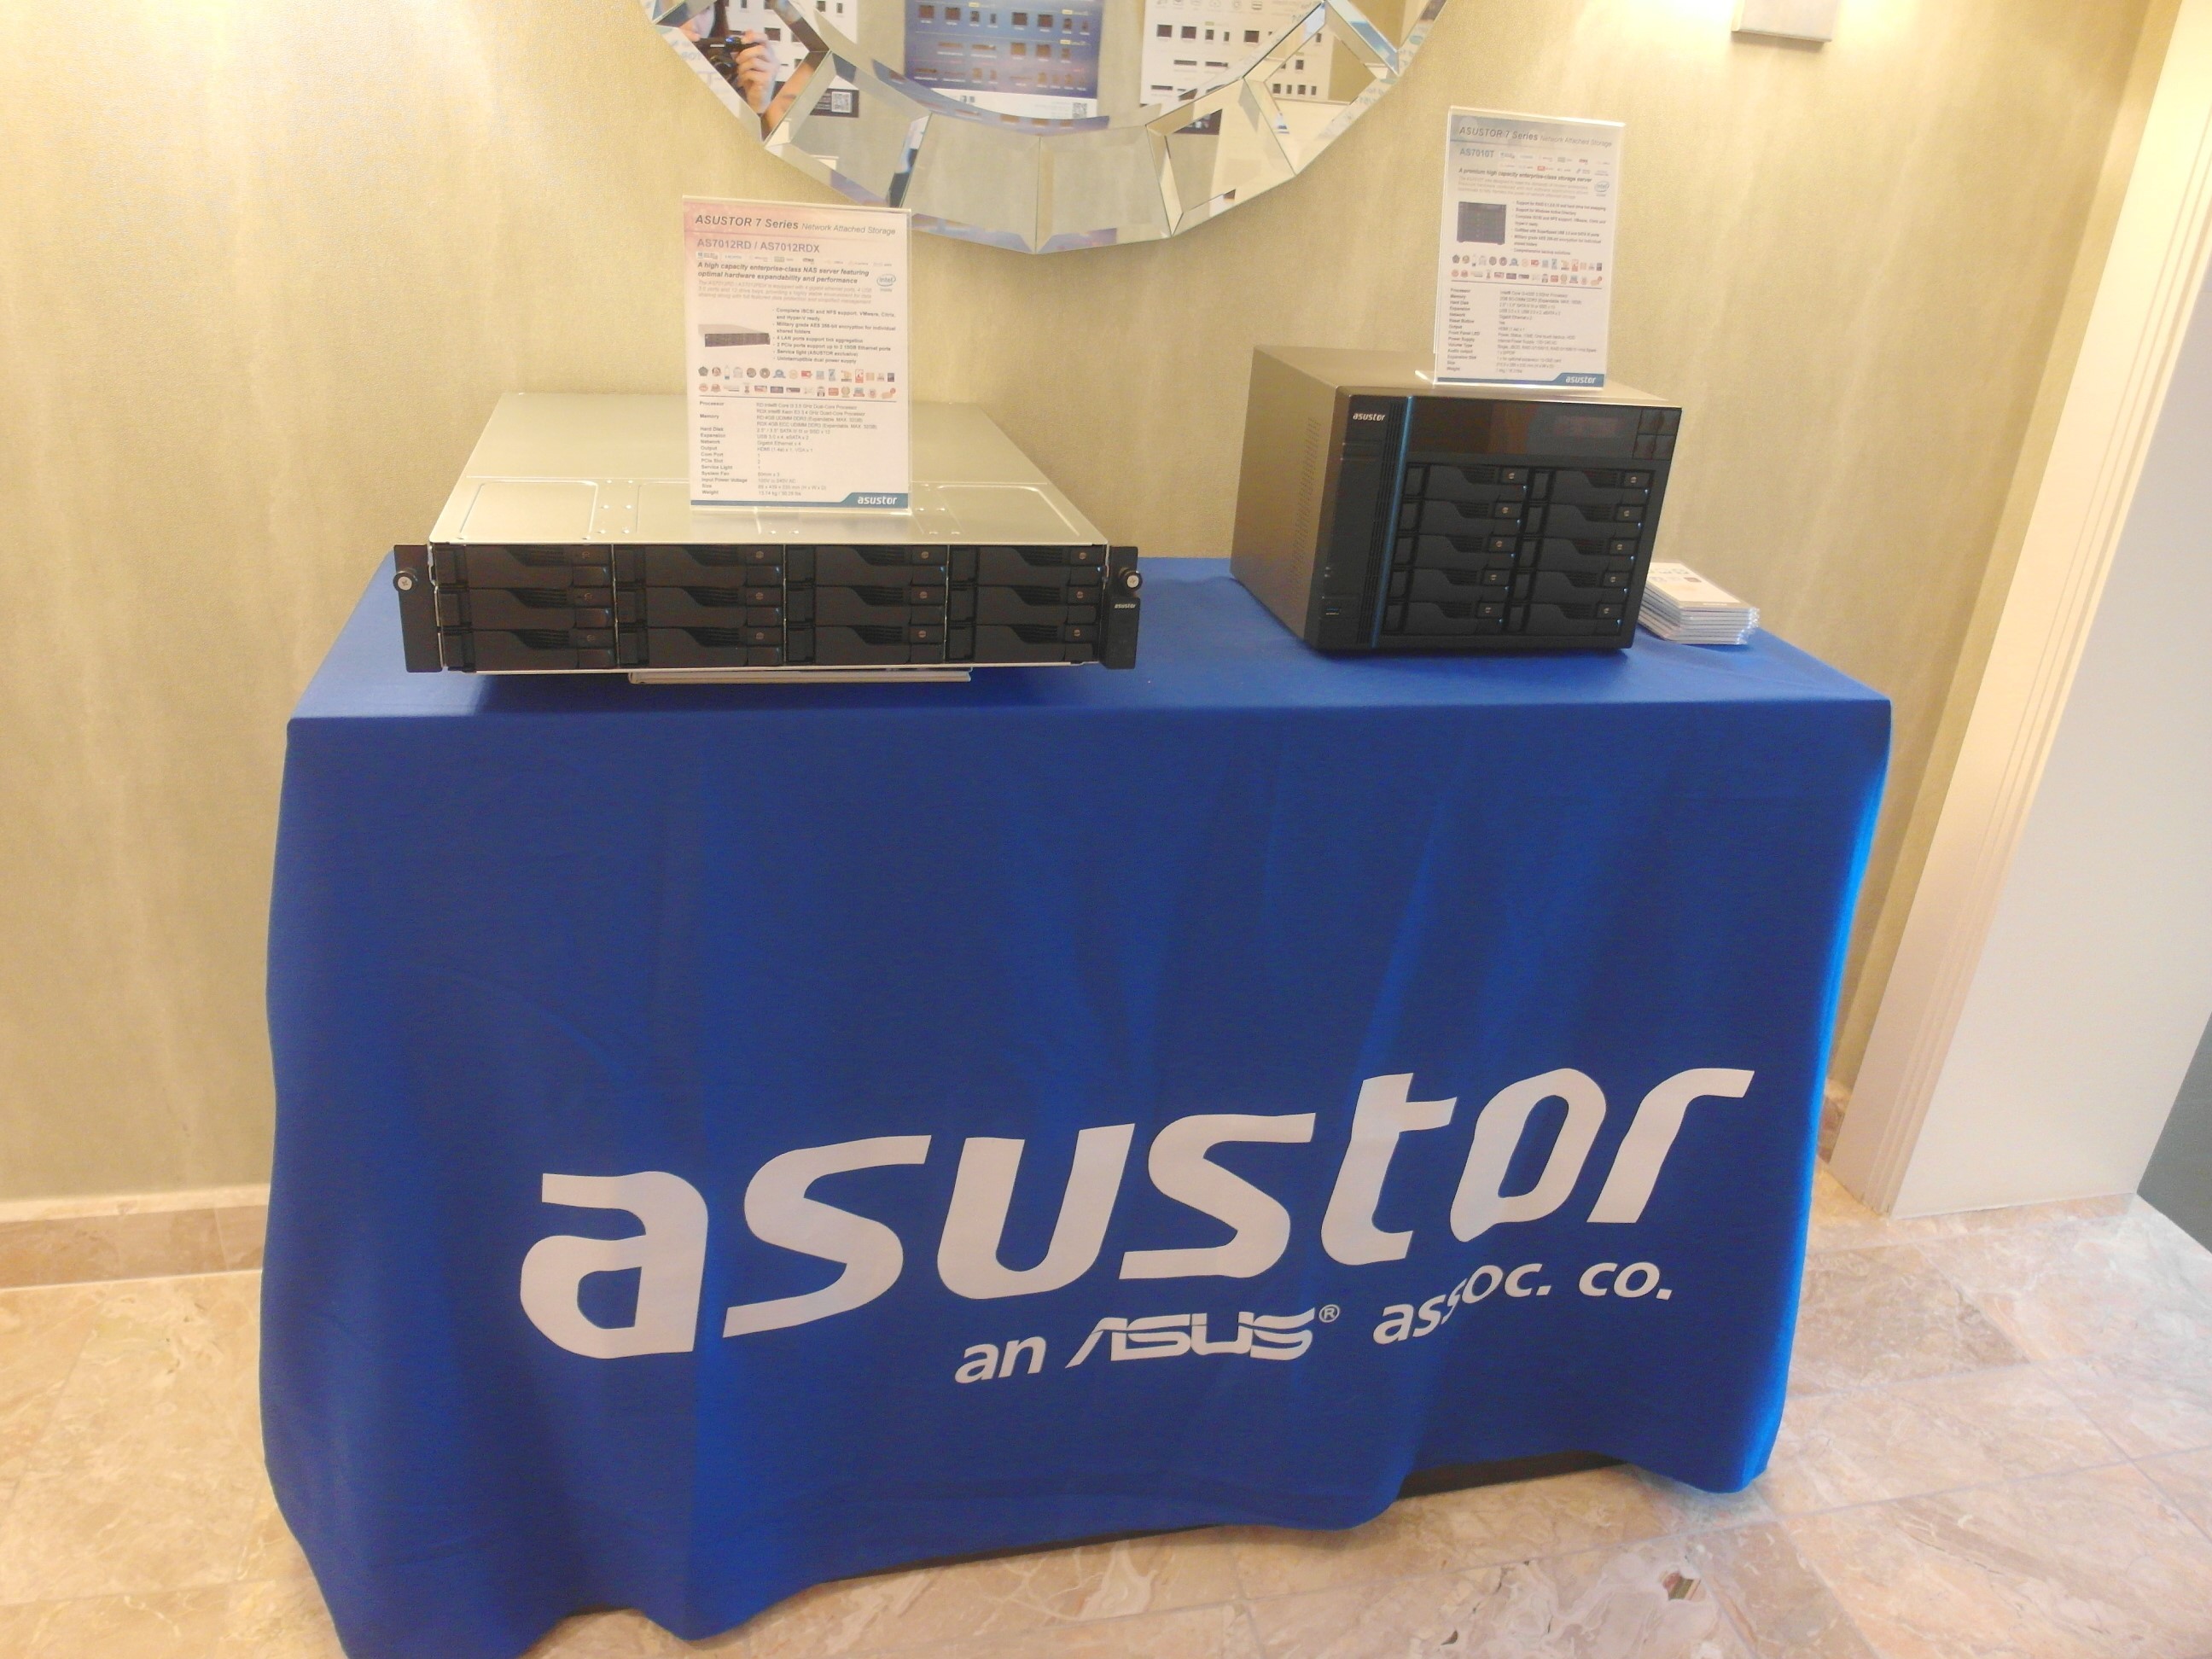 ASUSTOR Announces Xpanstor 4, a NAS Storage Capacity Expander